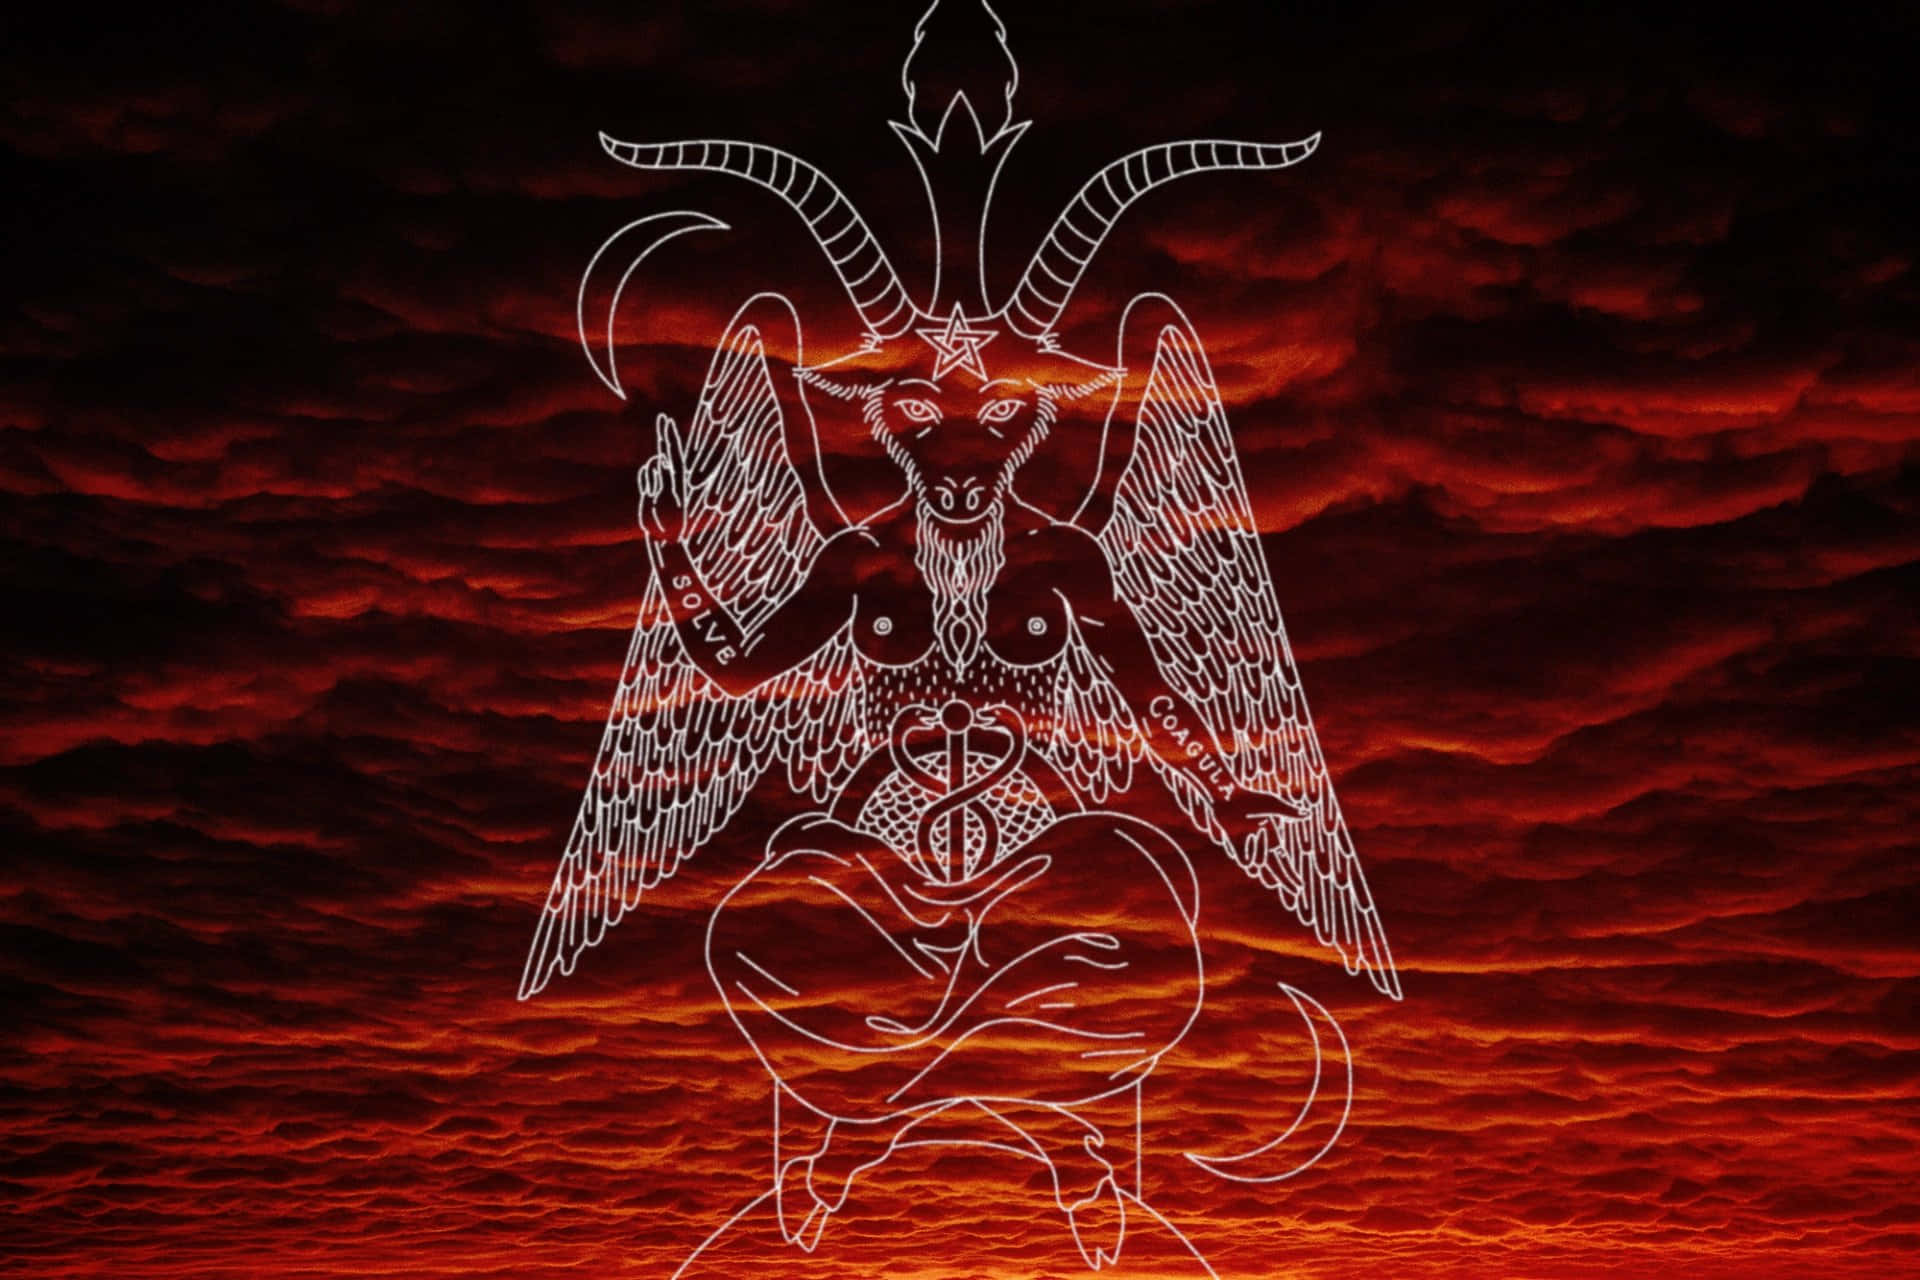 Satanic worship amidst a fiery inferno.